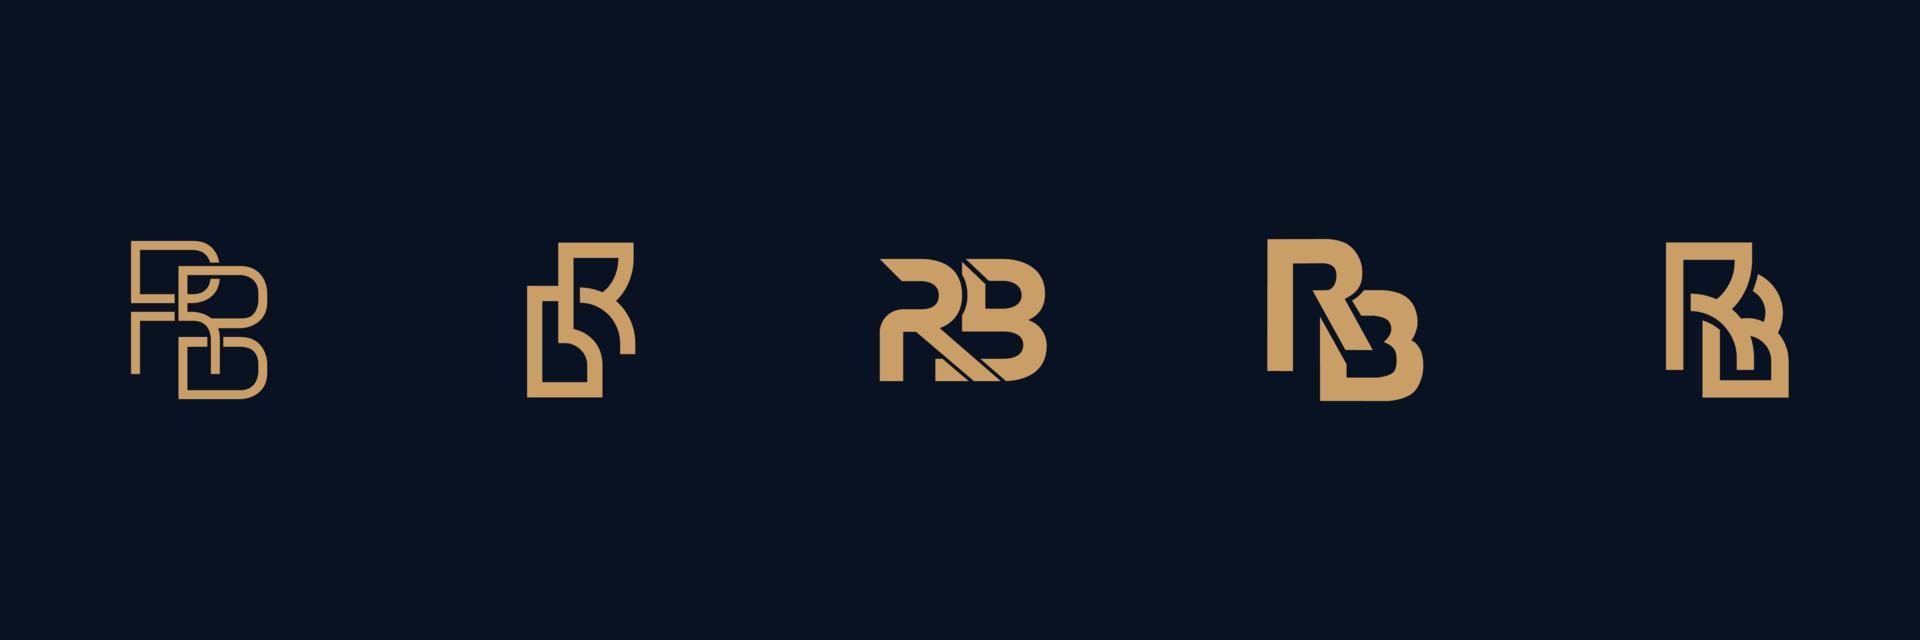 kreatives br, rb buchstabe logo vektordesign mit drei farben vektor